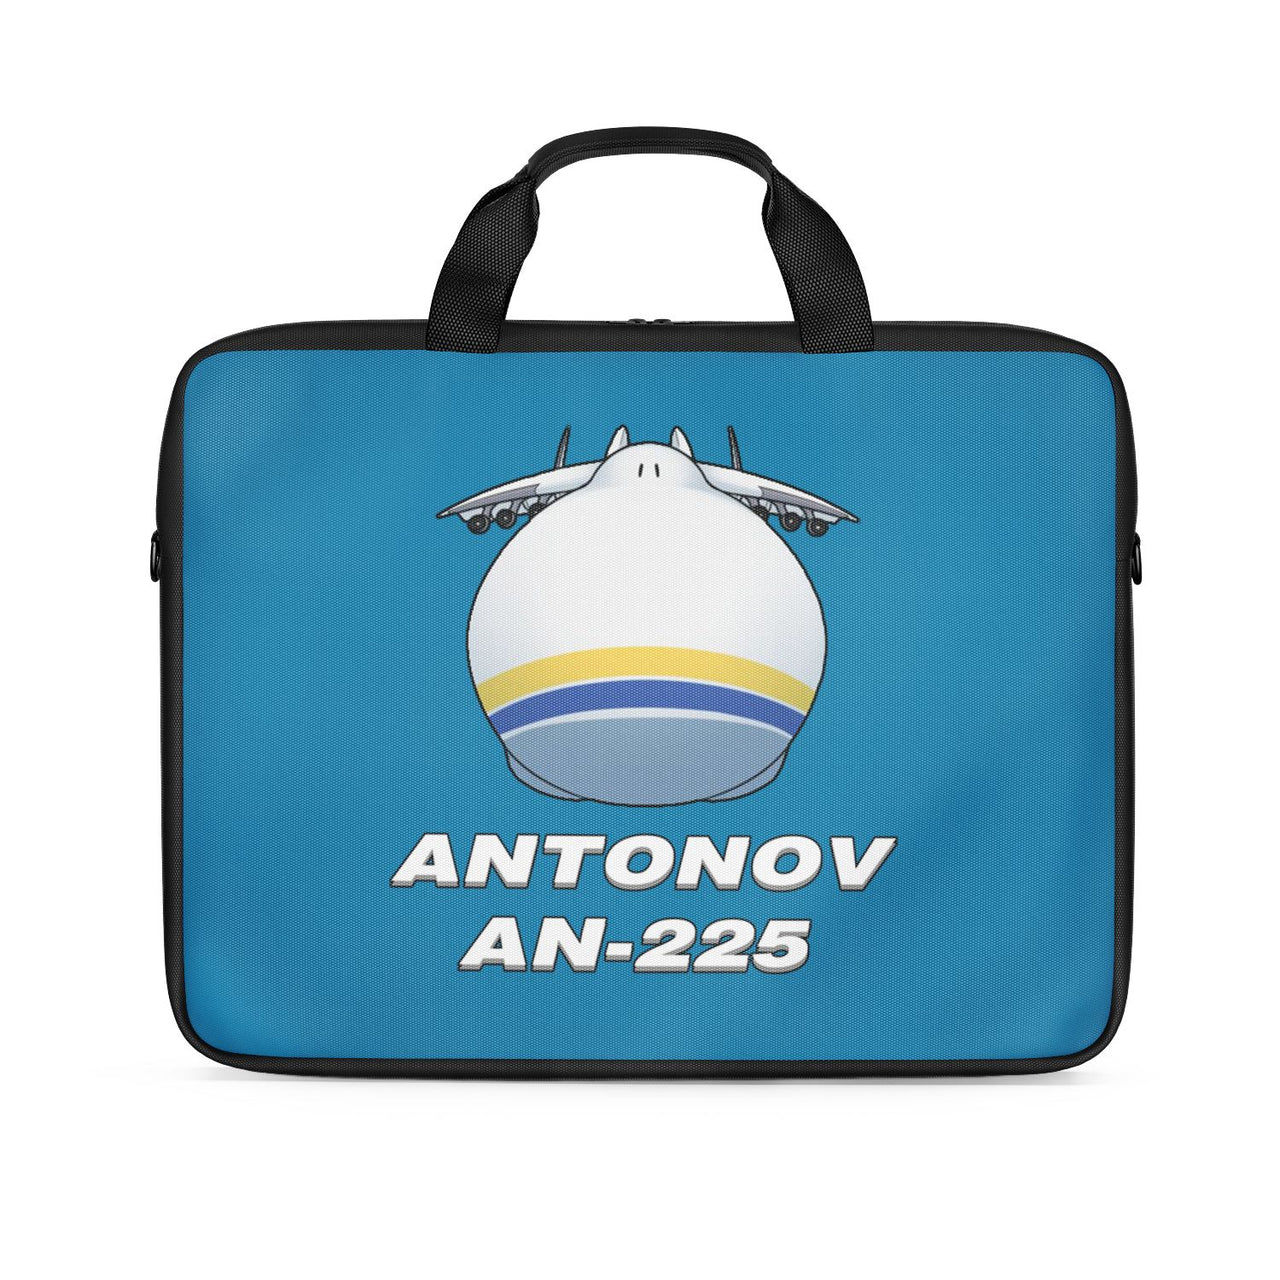 Antonov AN-225 (20) Designed Laptop & Tablet Bags